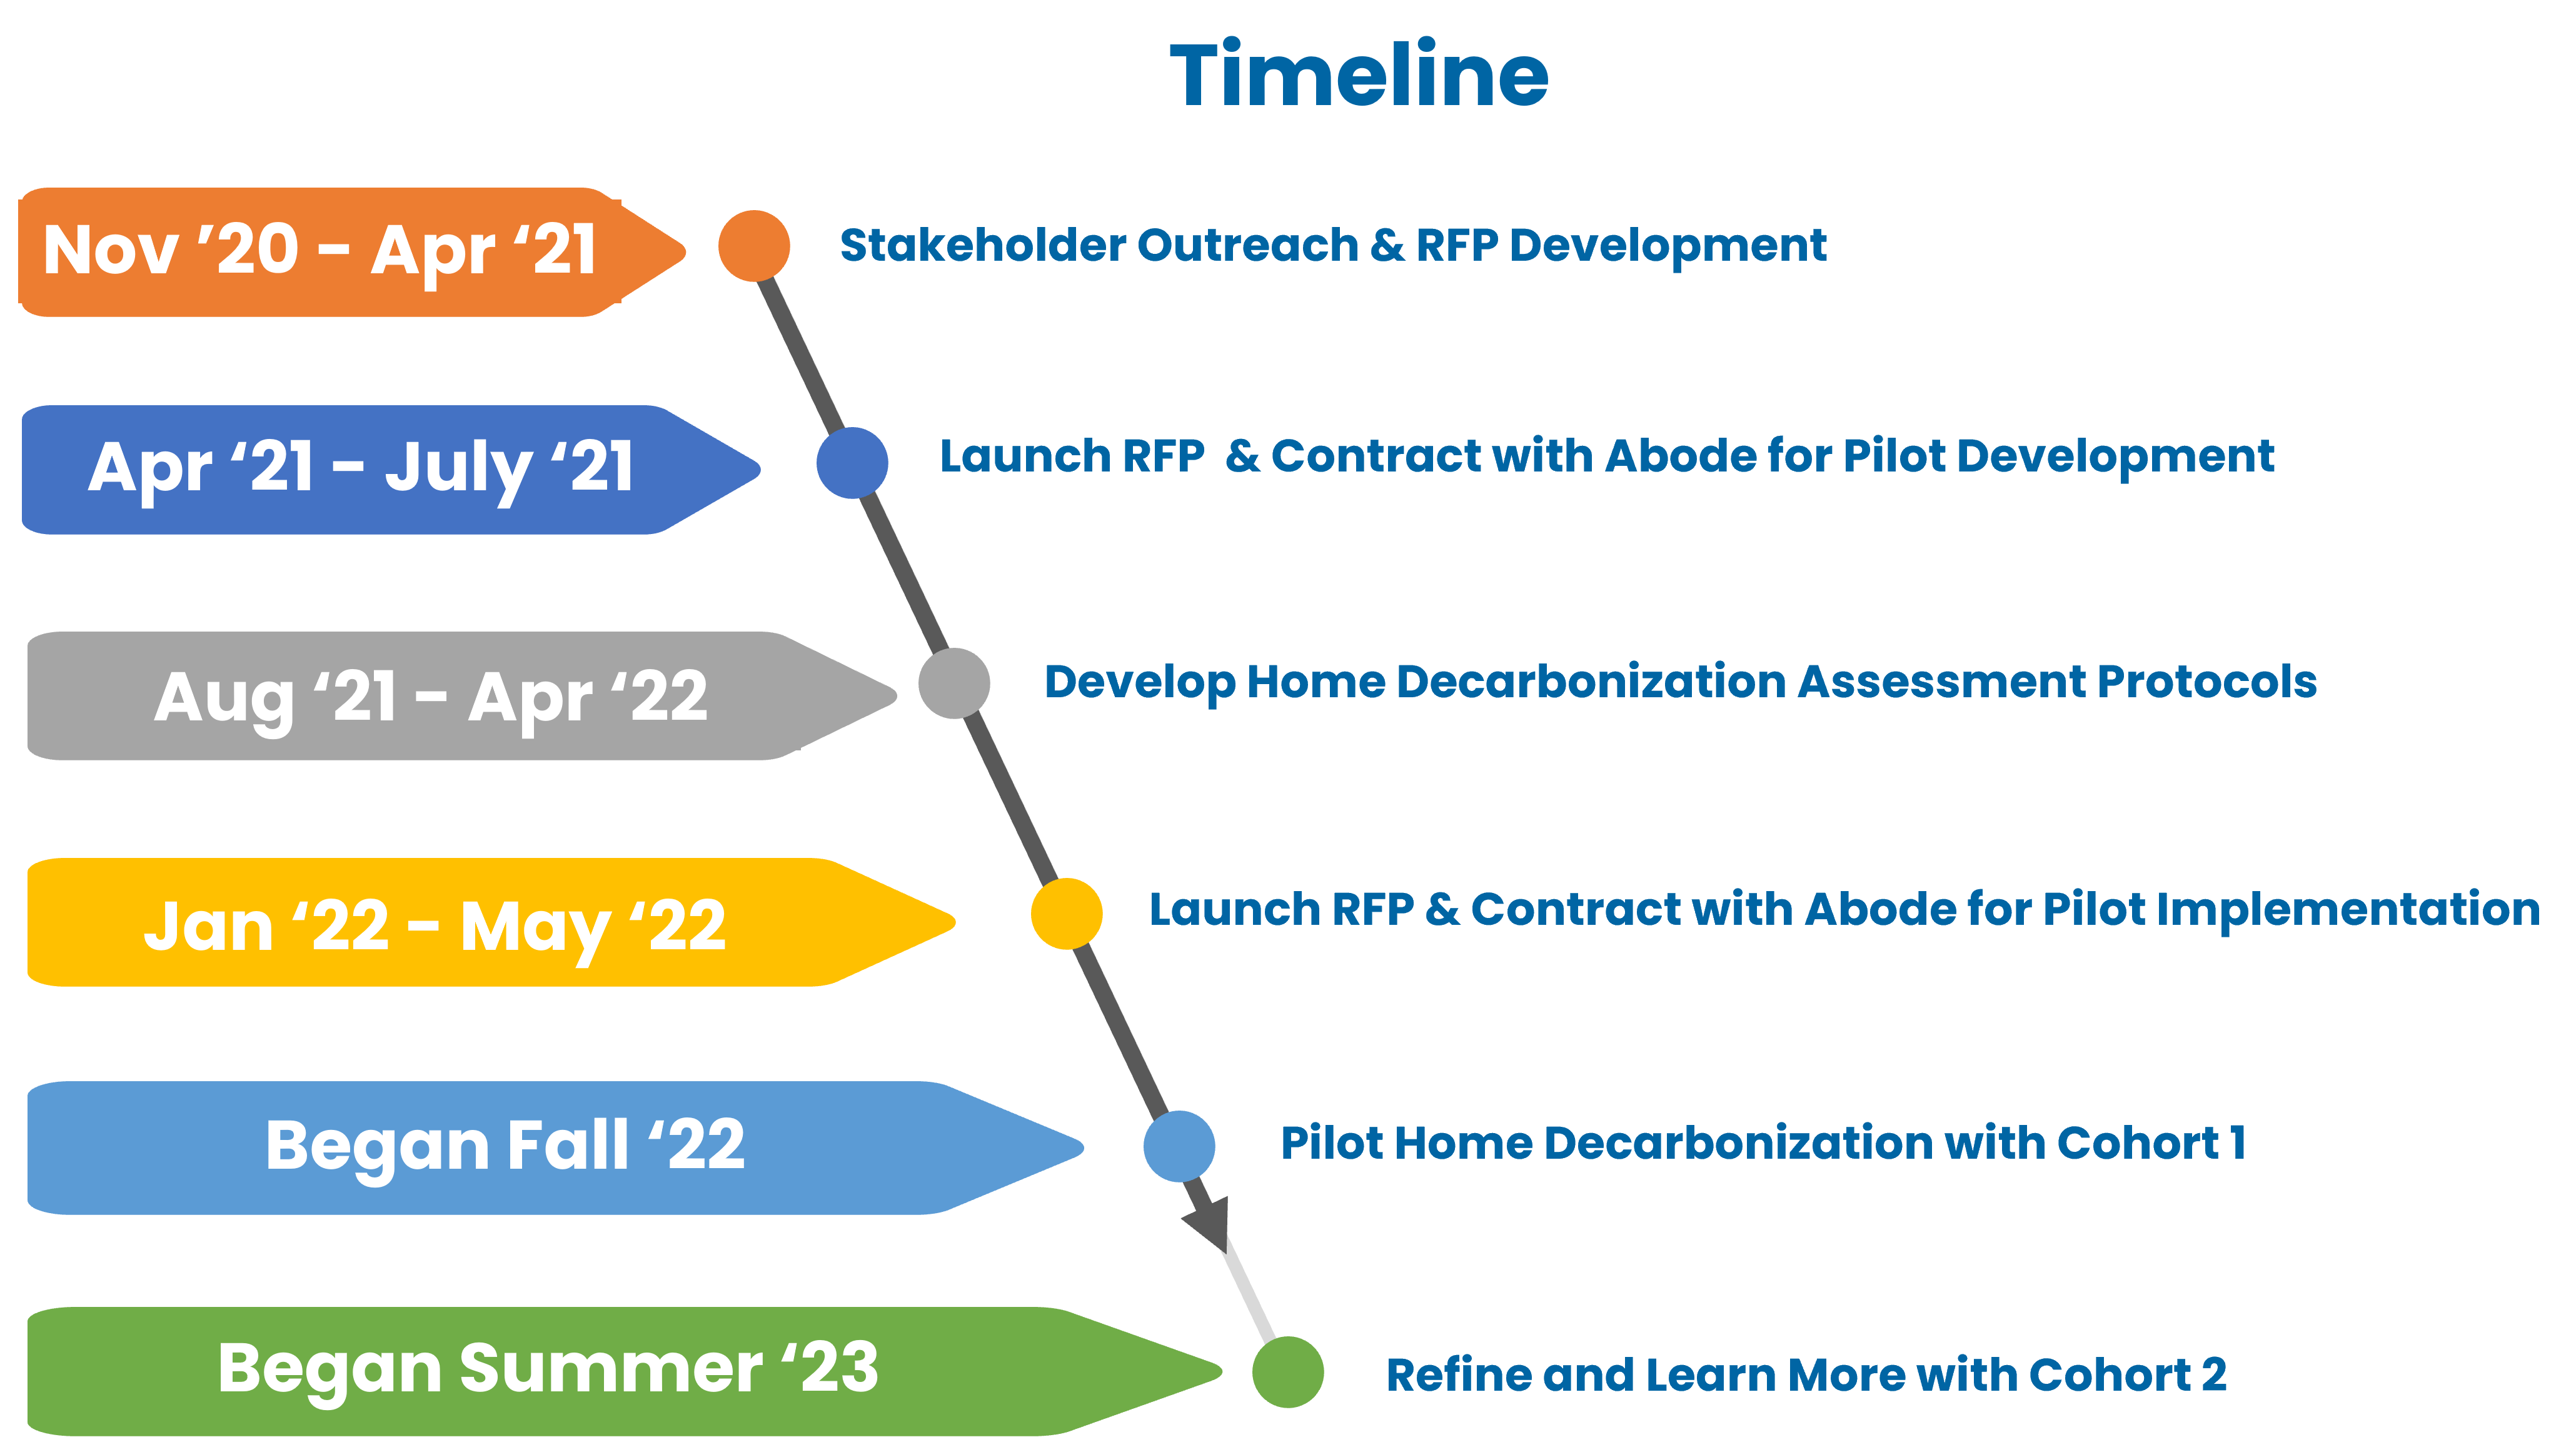 Timeline showing start of program in Apr. 2021 through Cohort 2 recruitment in Summer 2023